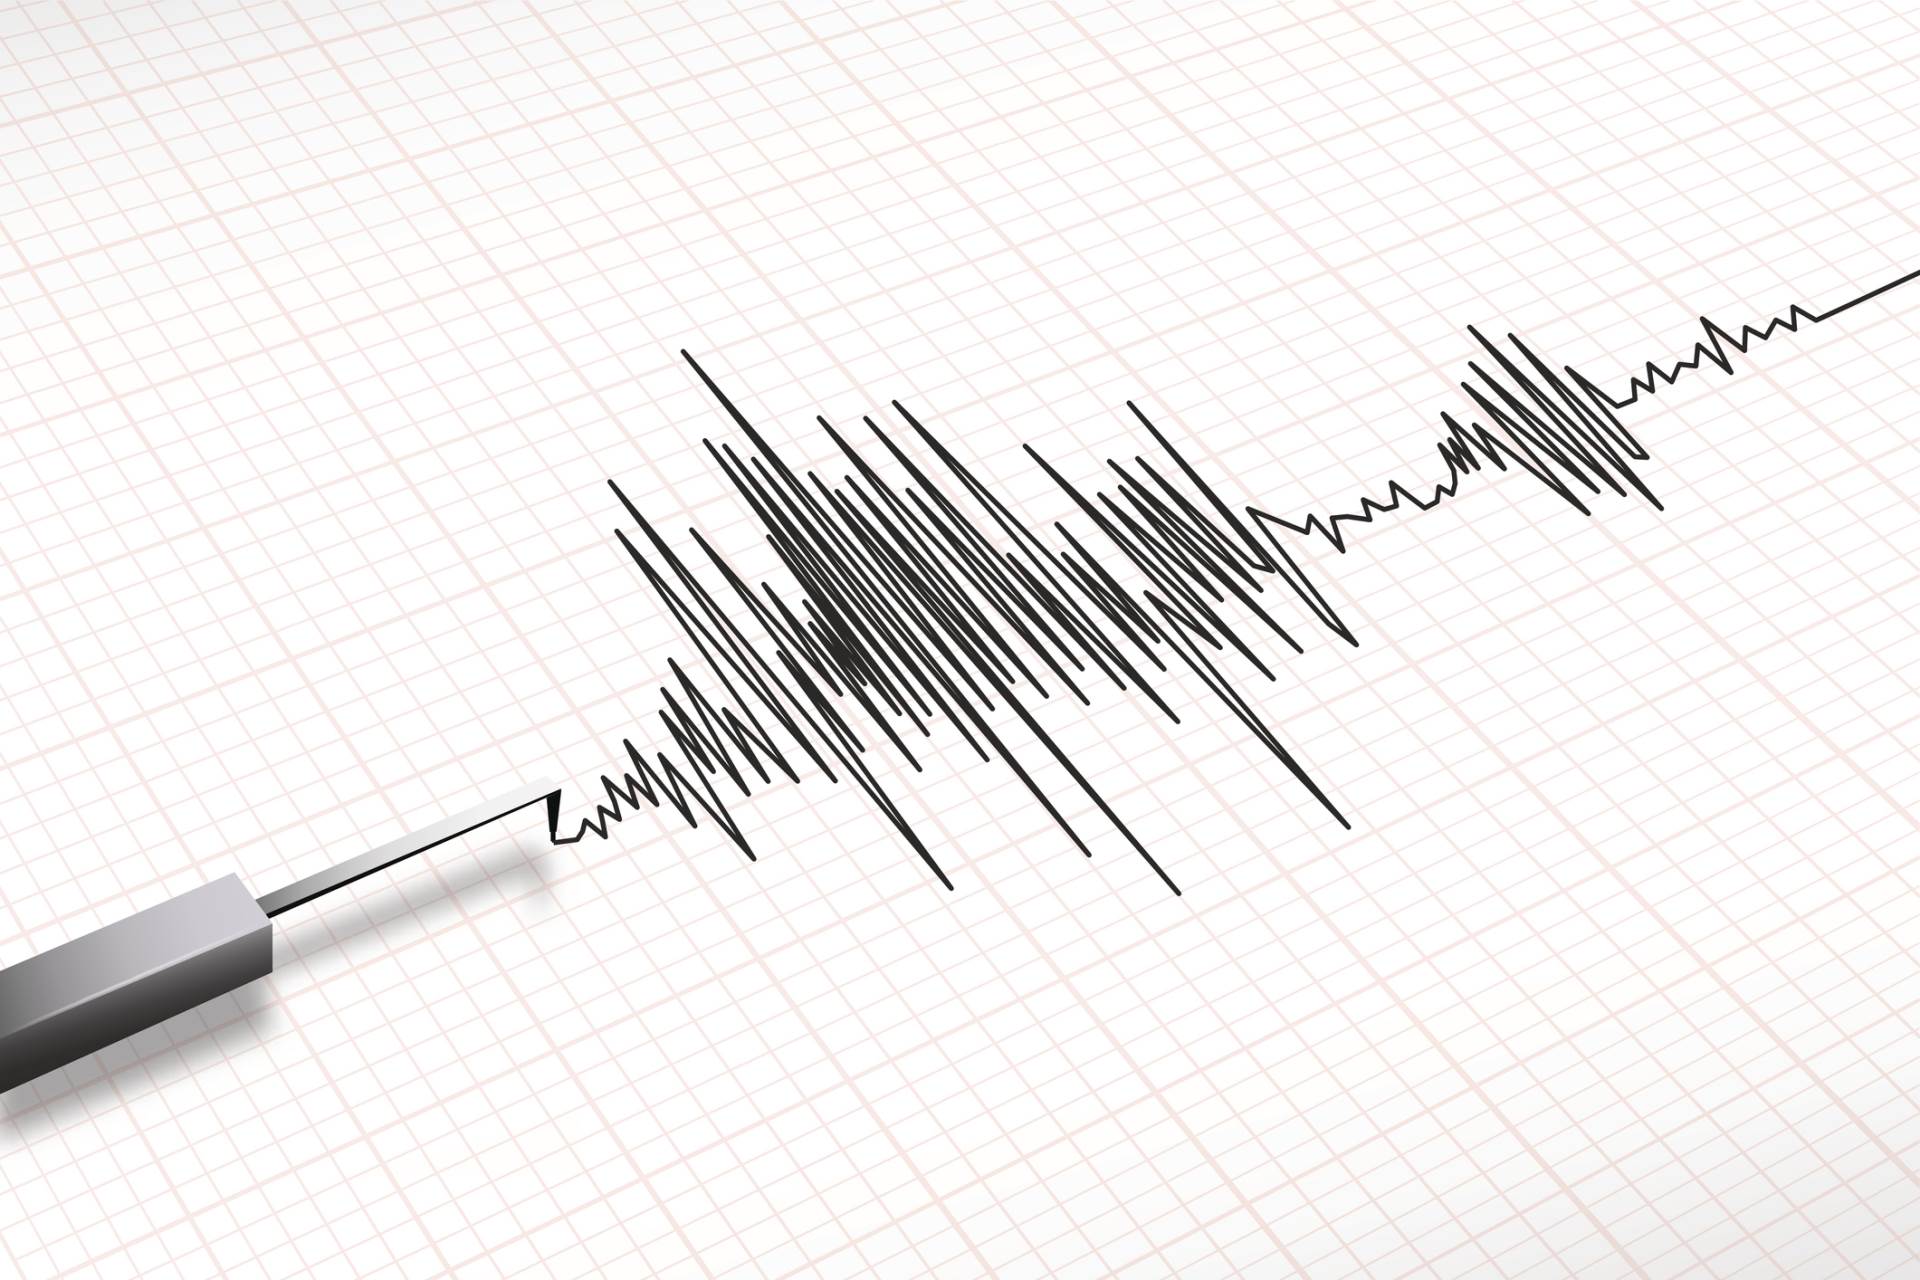  Zemljotres u blizini Kruševca u Srbiji  